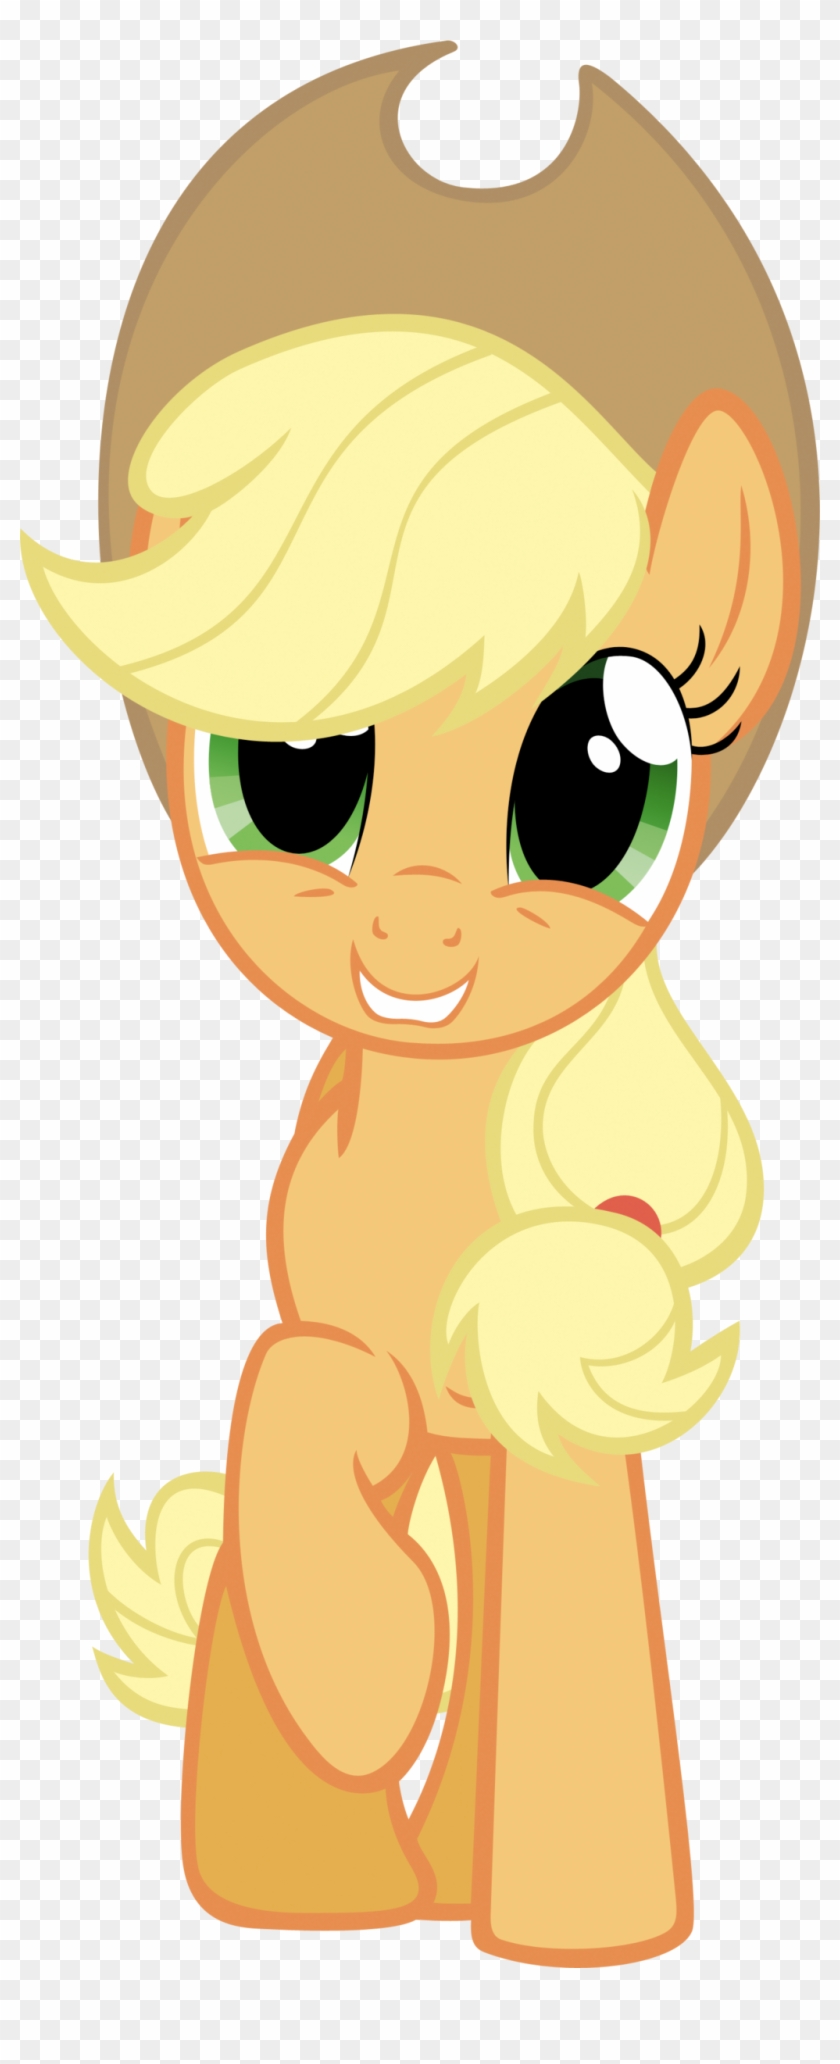 By Foreverlovatoo Applejack Png - Apple Jack Pony Happy #867314